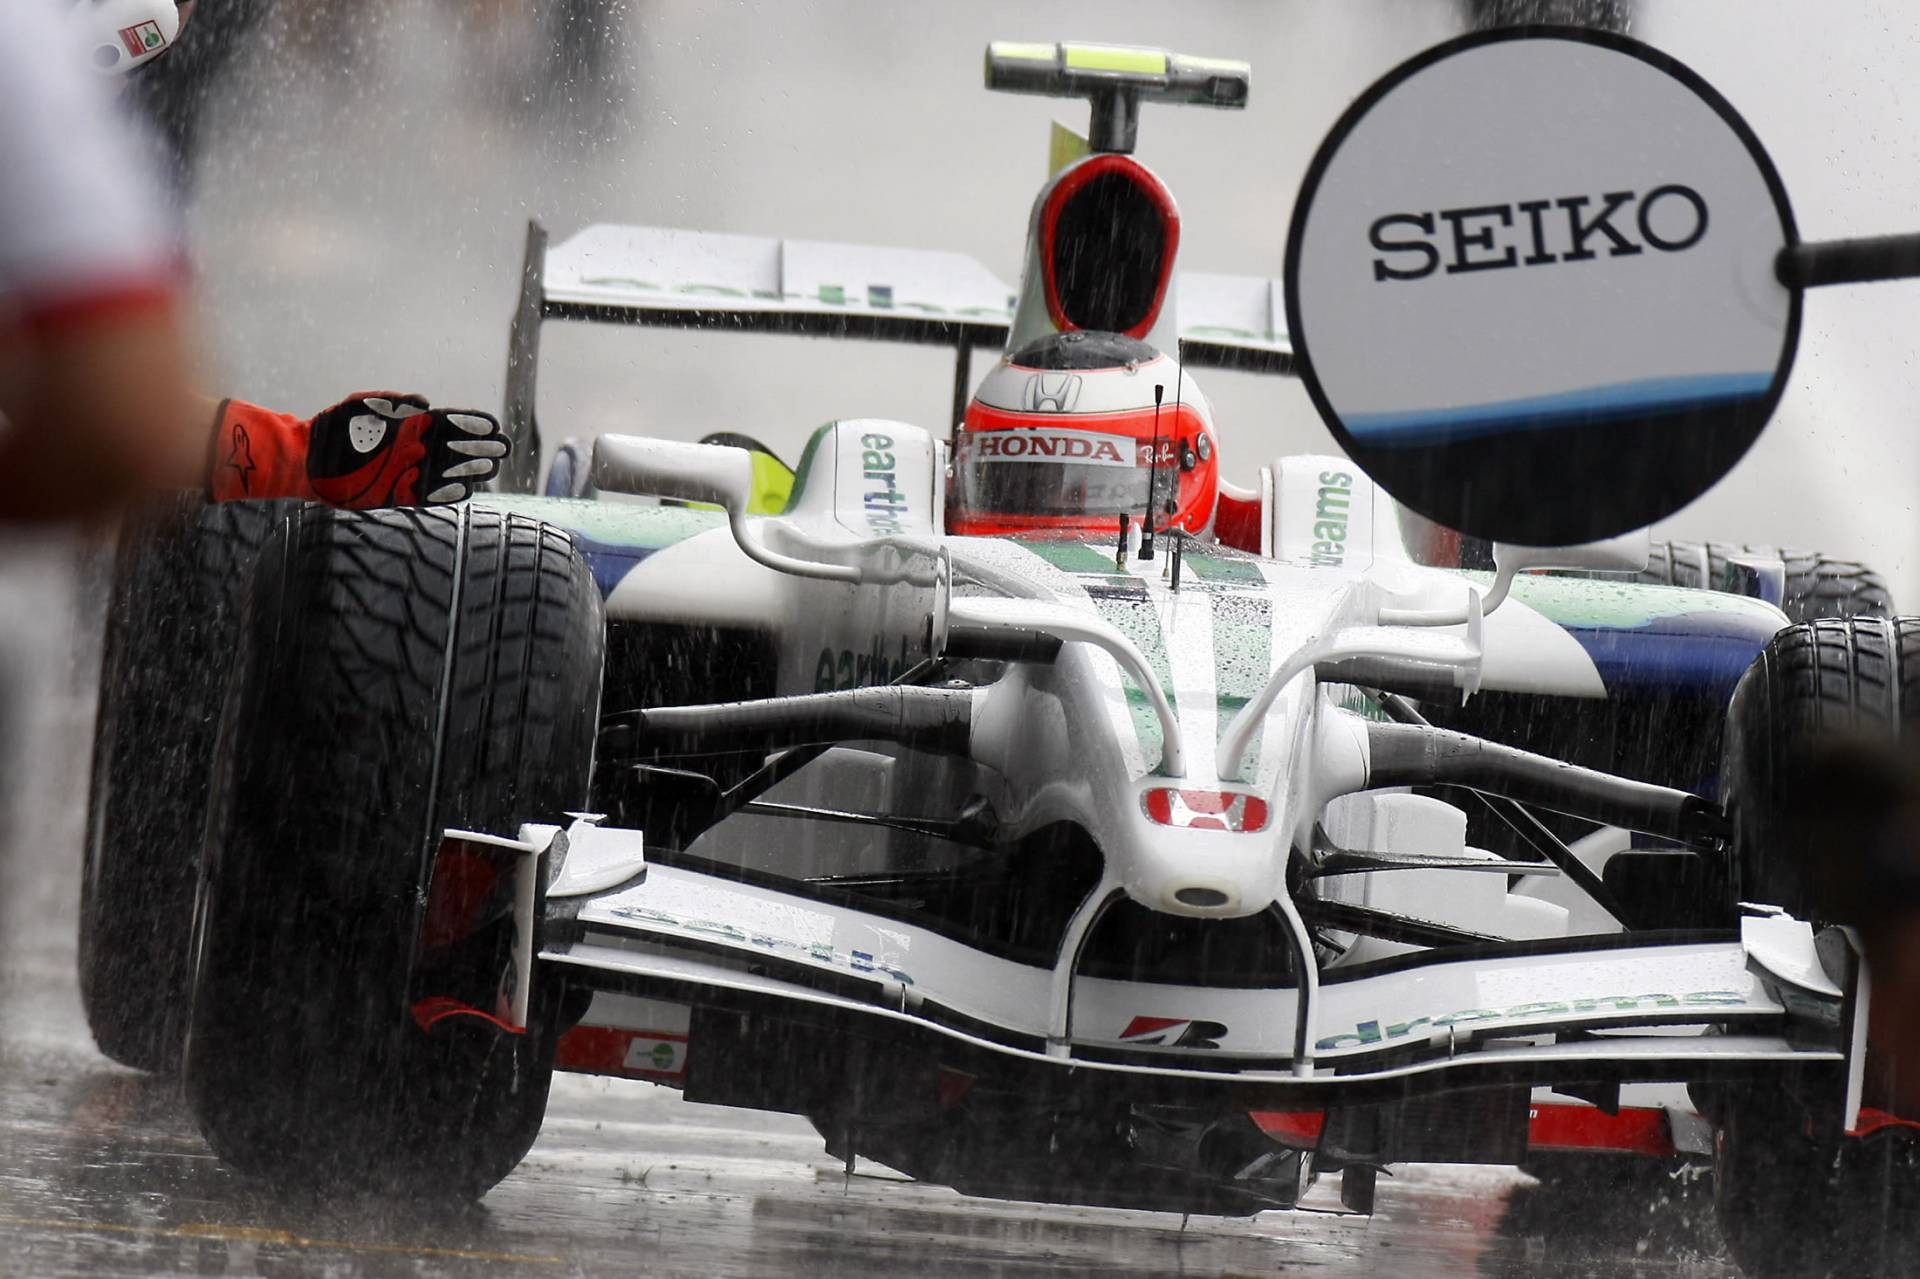 Rubens Barrichello Formula 1 Car Honda Wallpapers Hd Desktop And Mobile Backgrounds